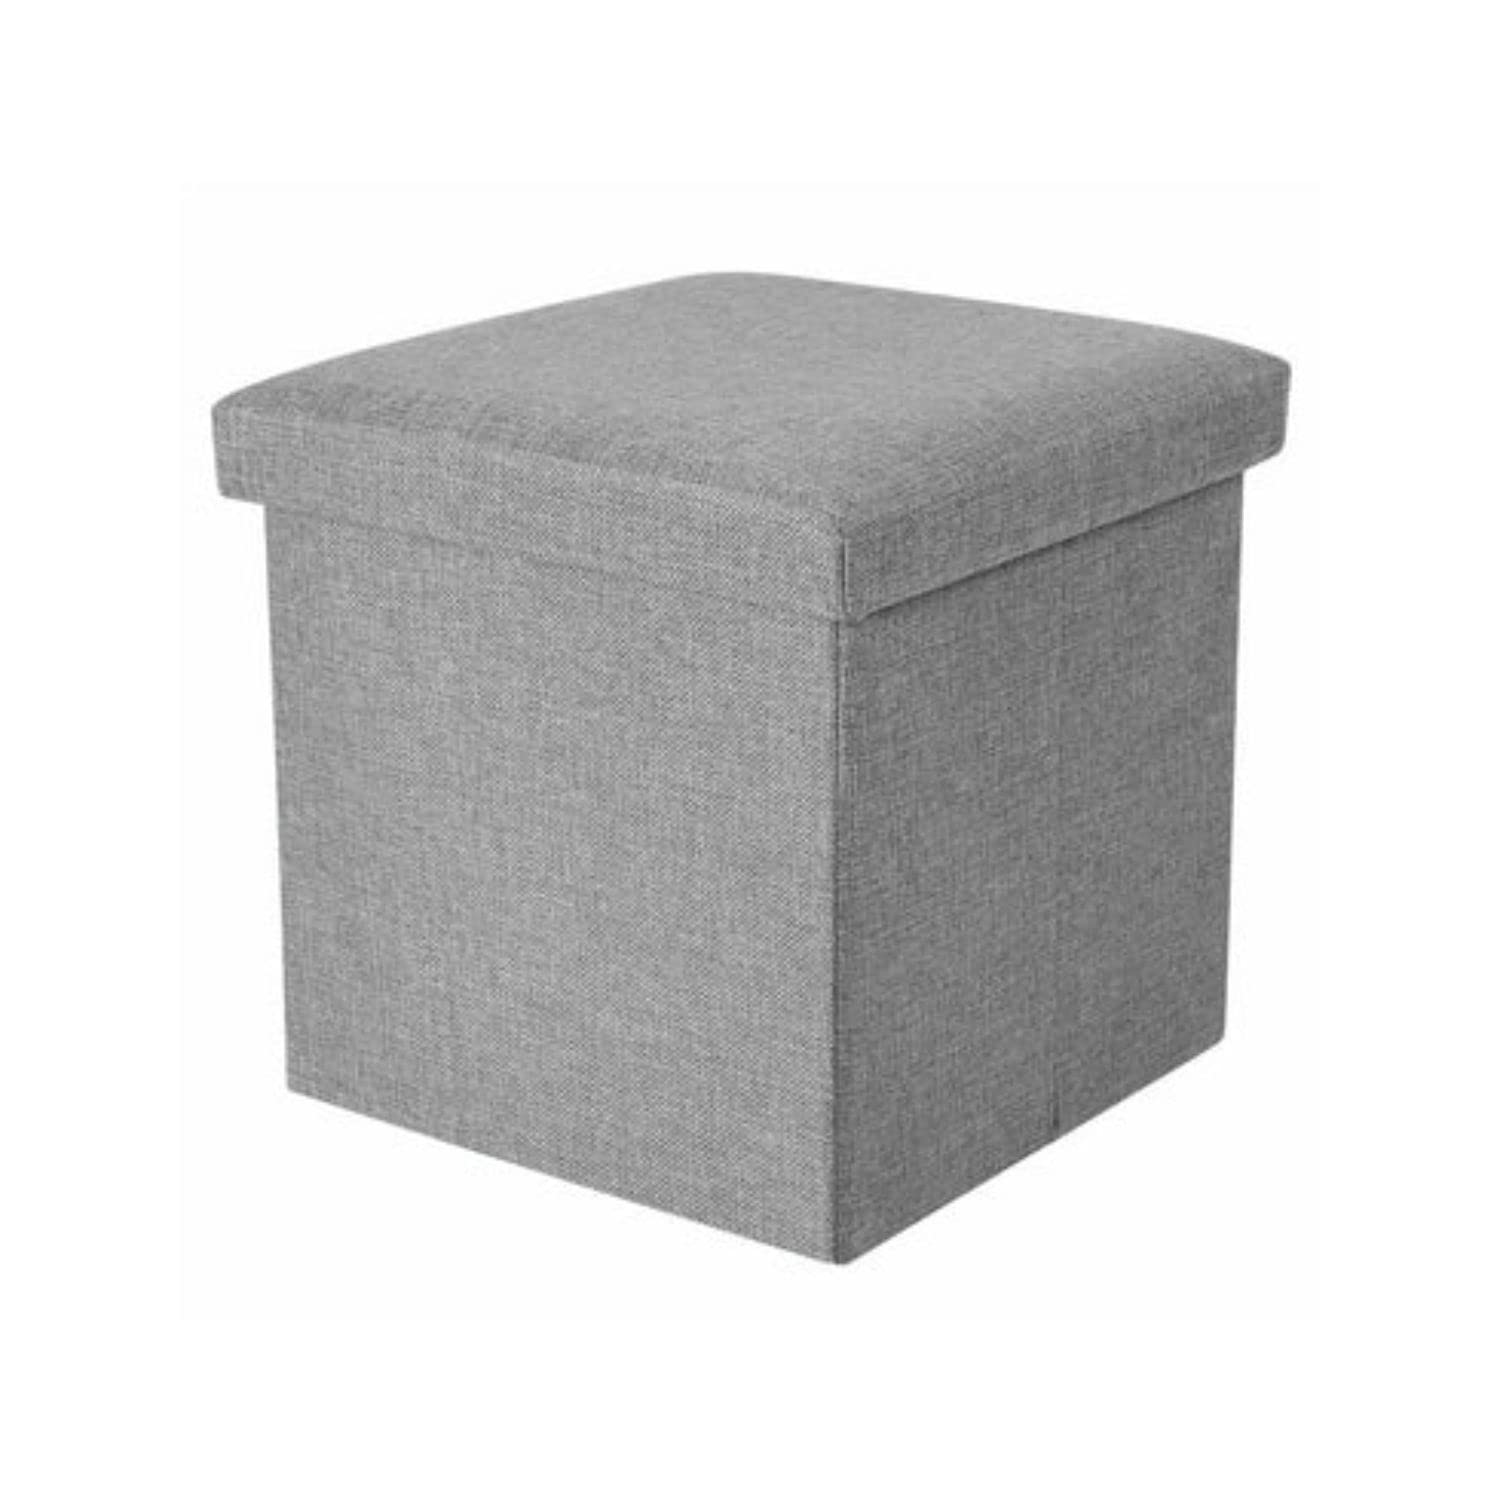 Kids Mandi cube shape stool with storage and cushion, versatile design.